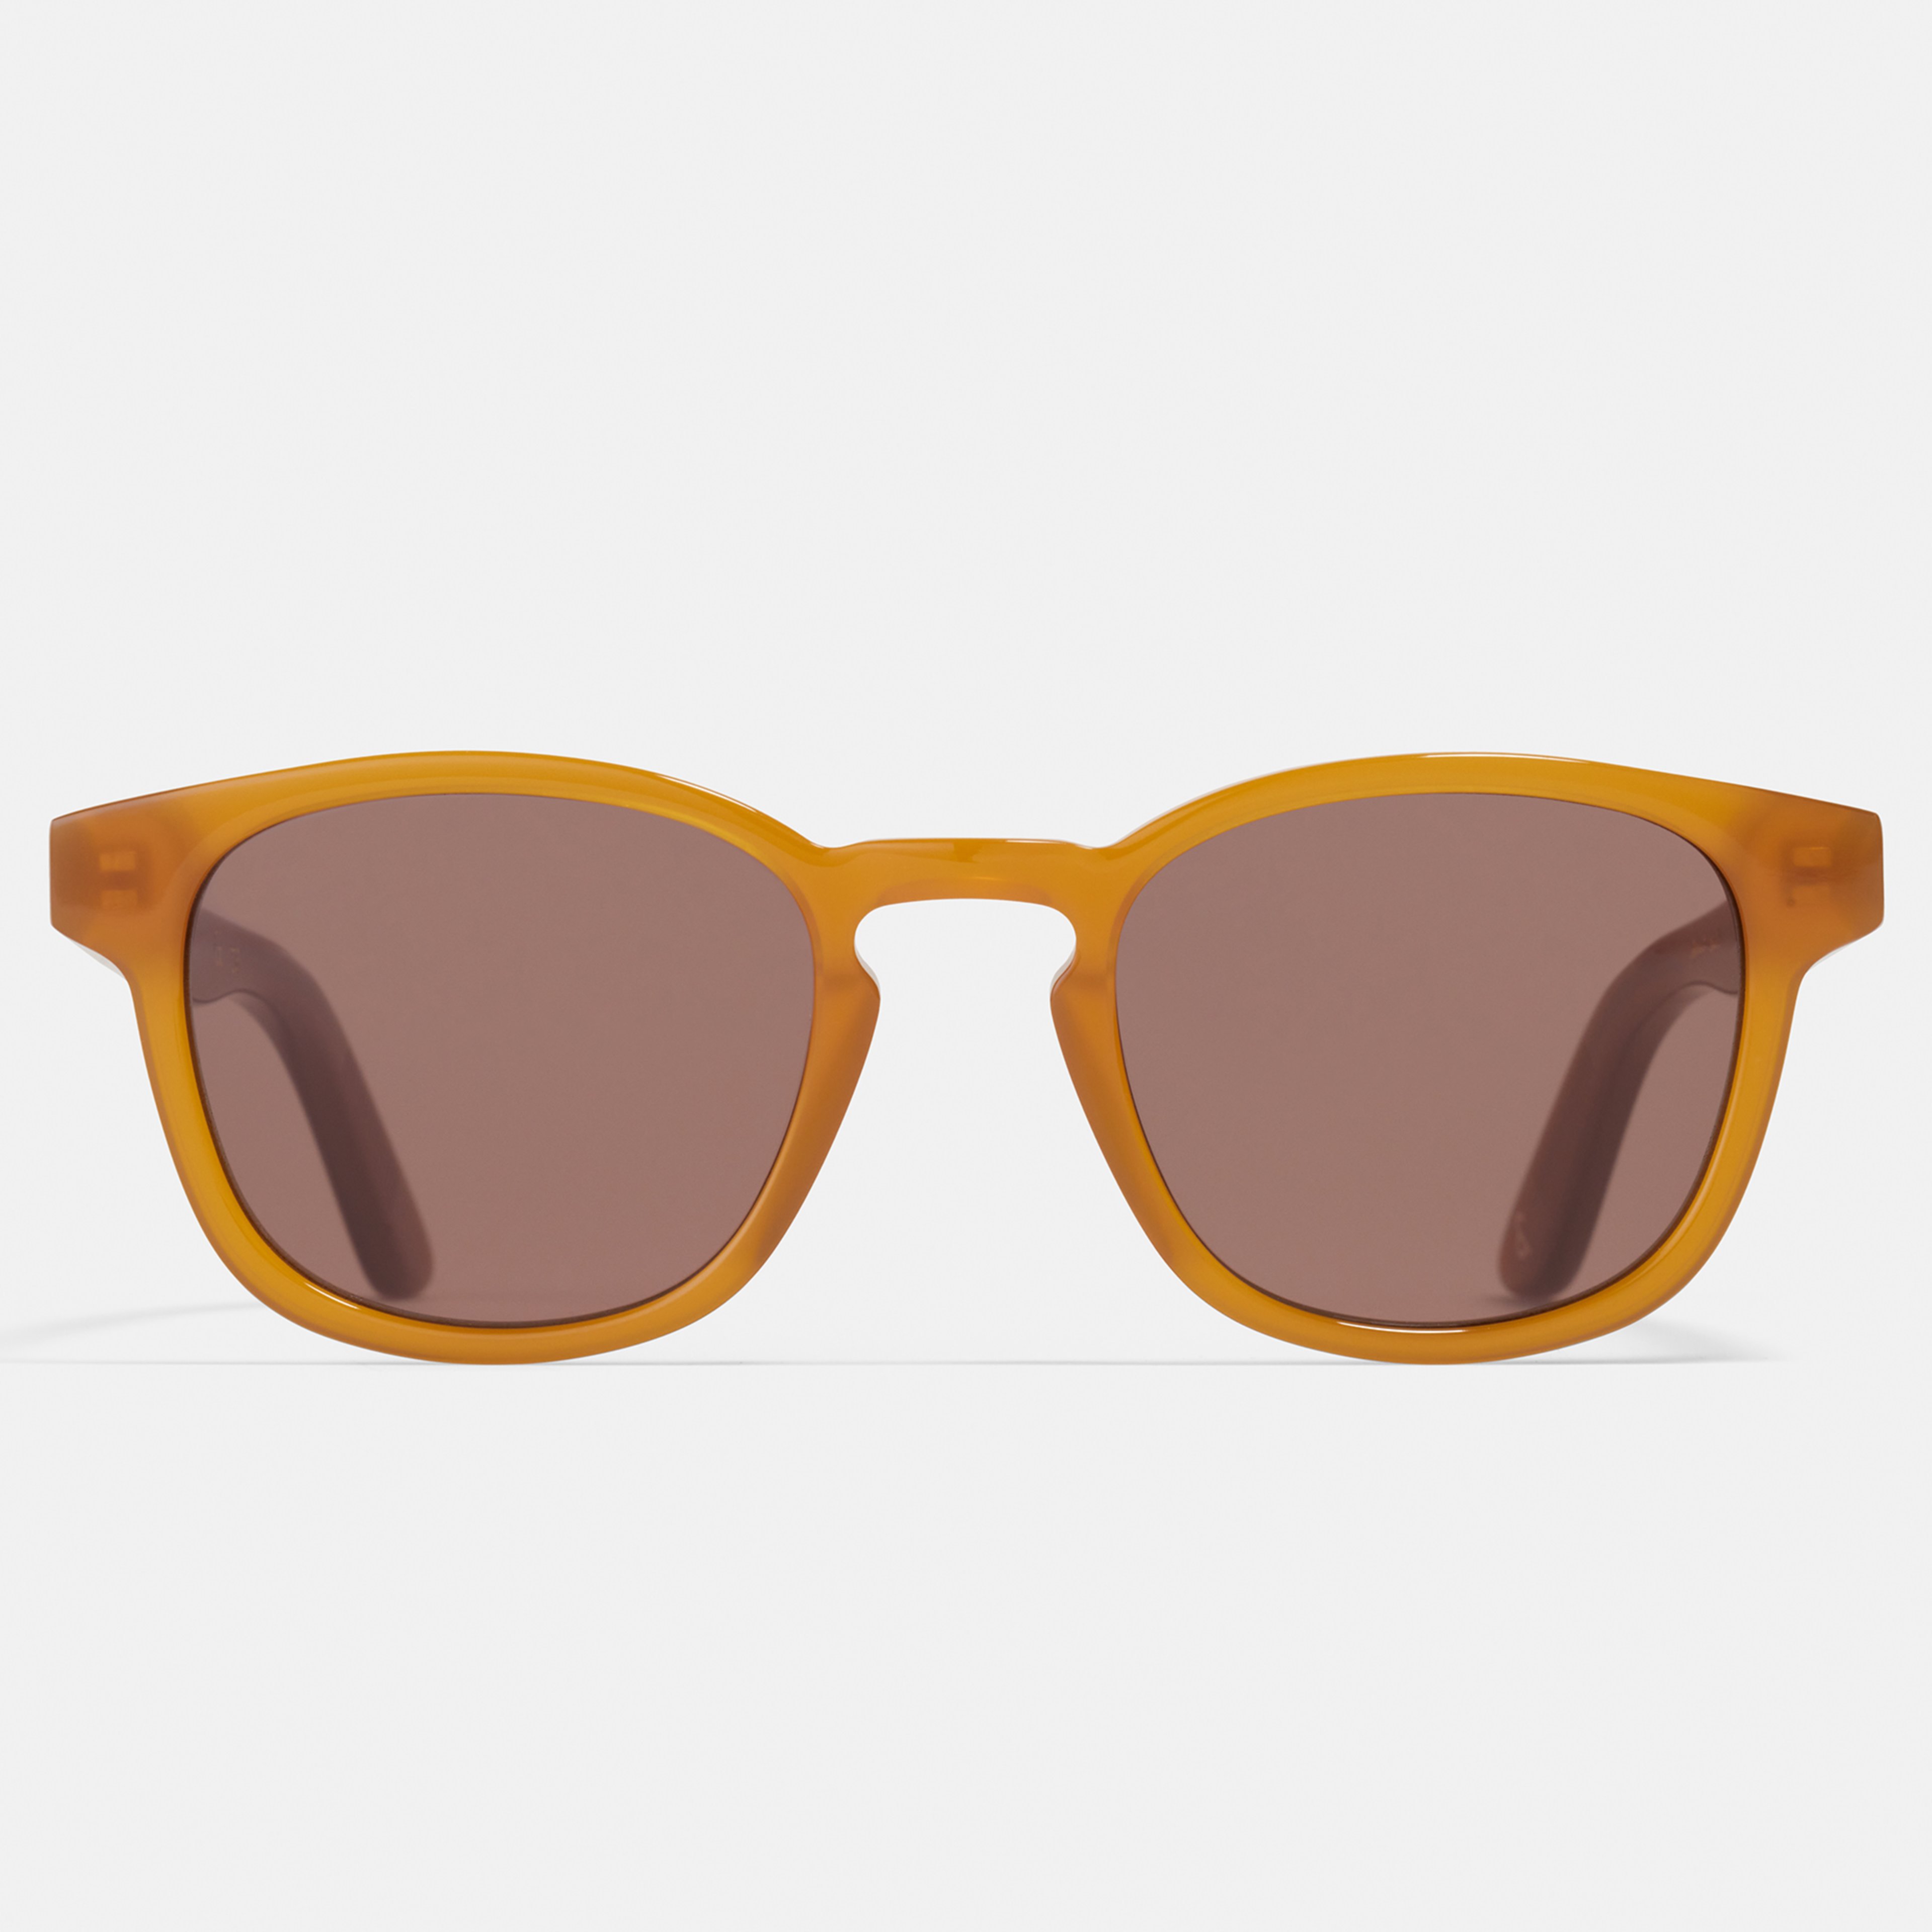 Ace & Tate Sunglasses | Square Renew bio acetate in Brown